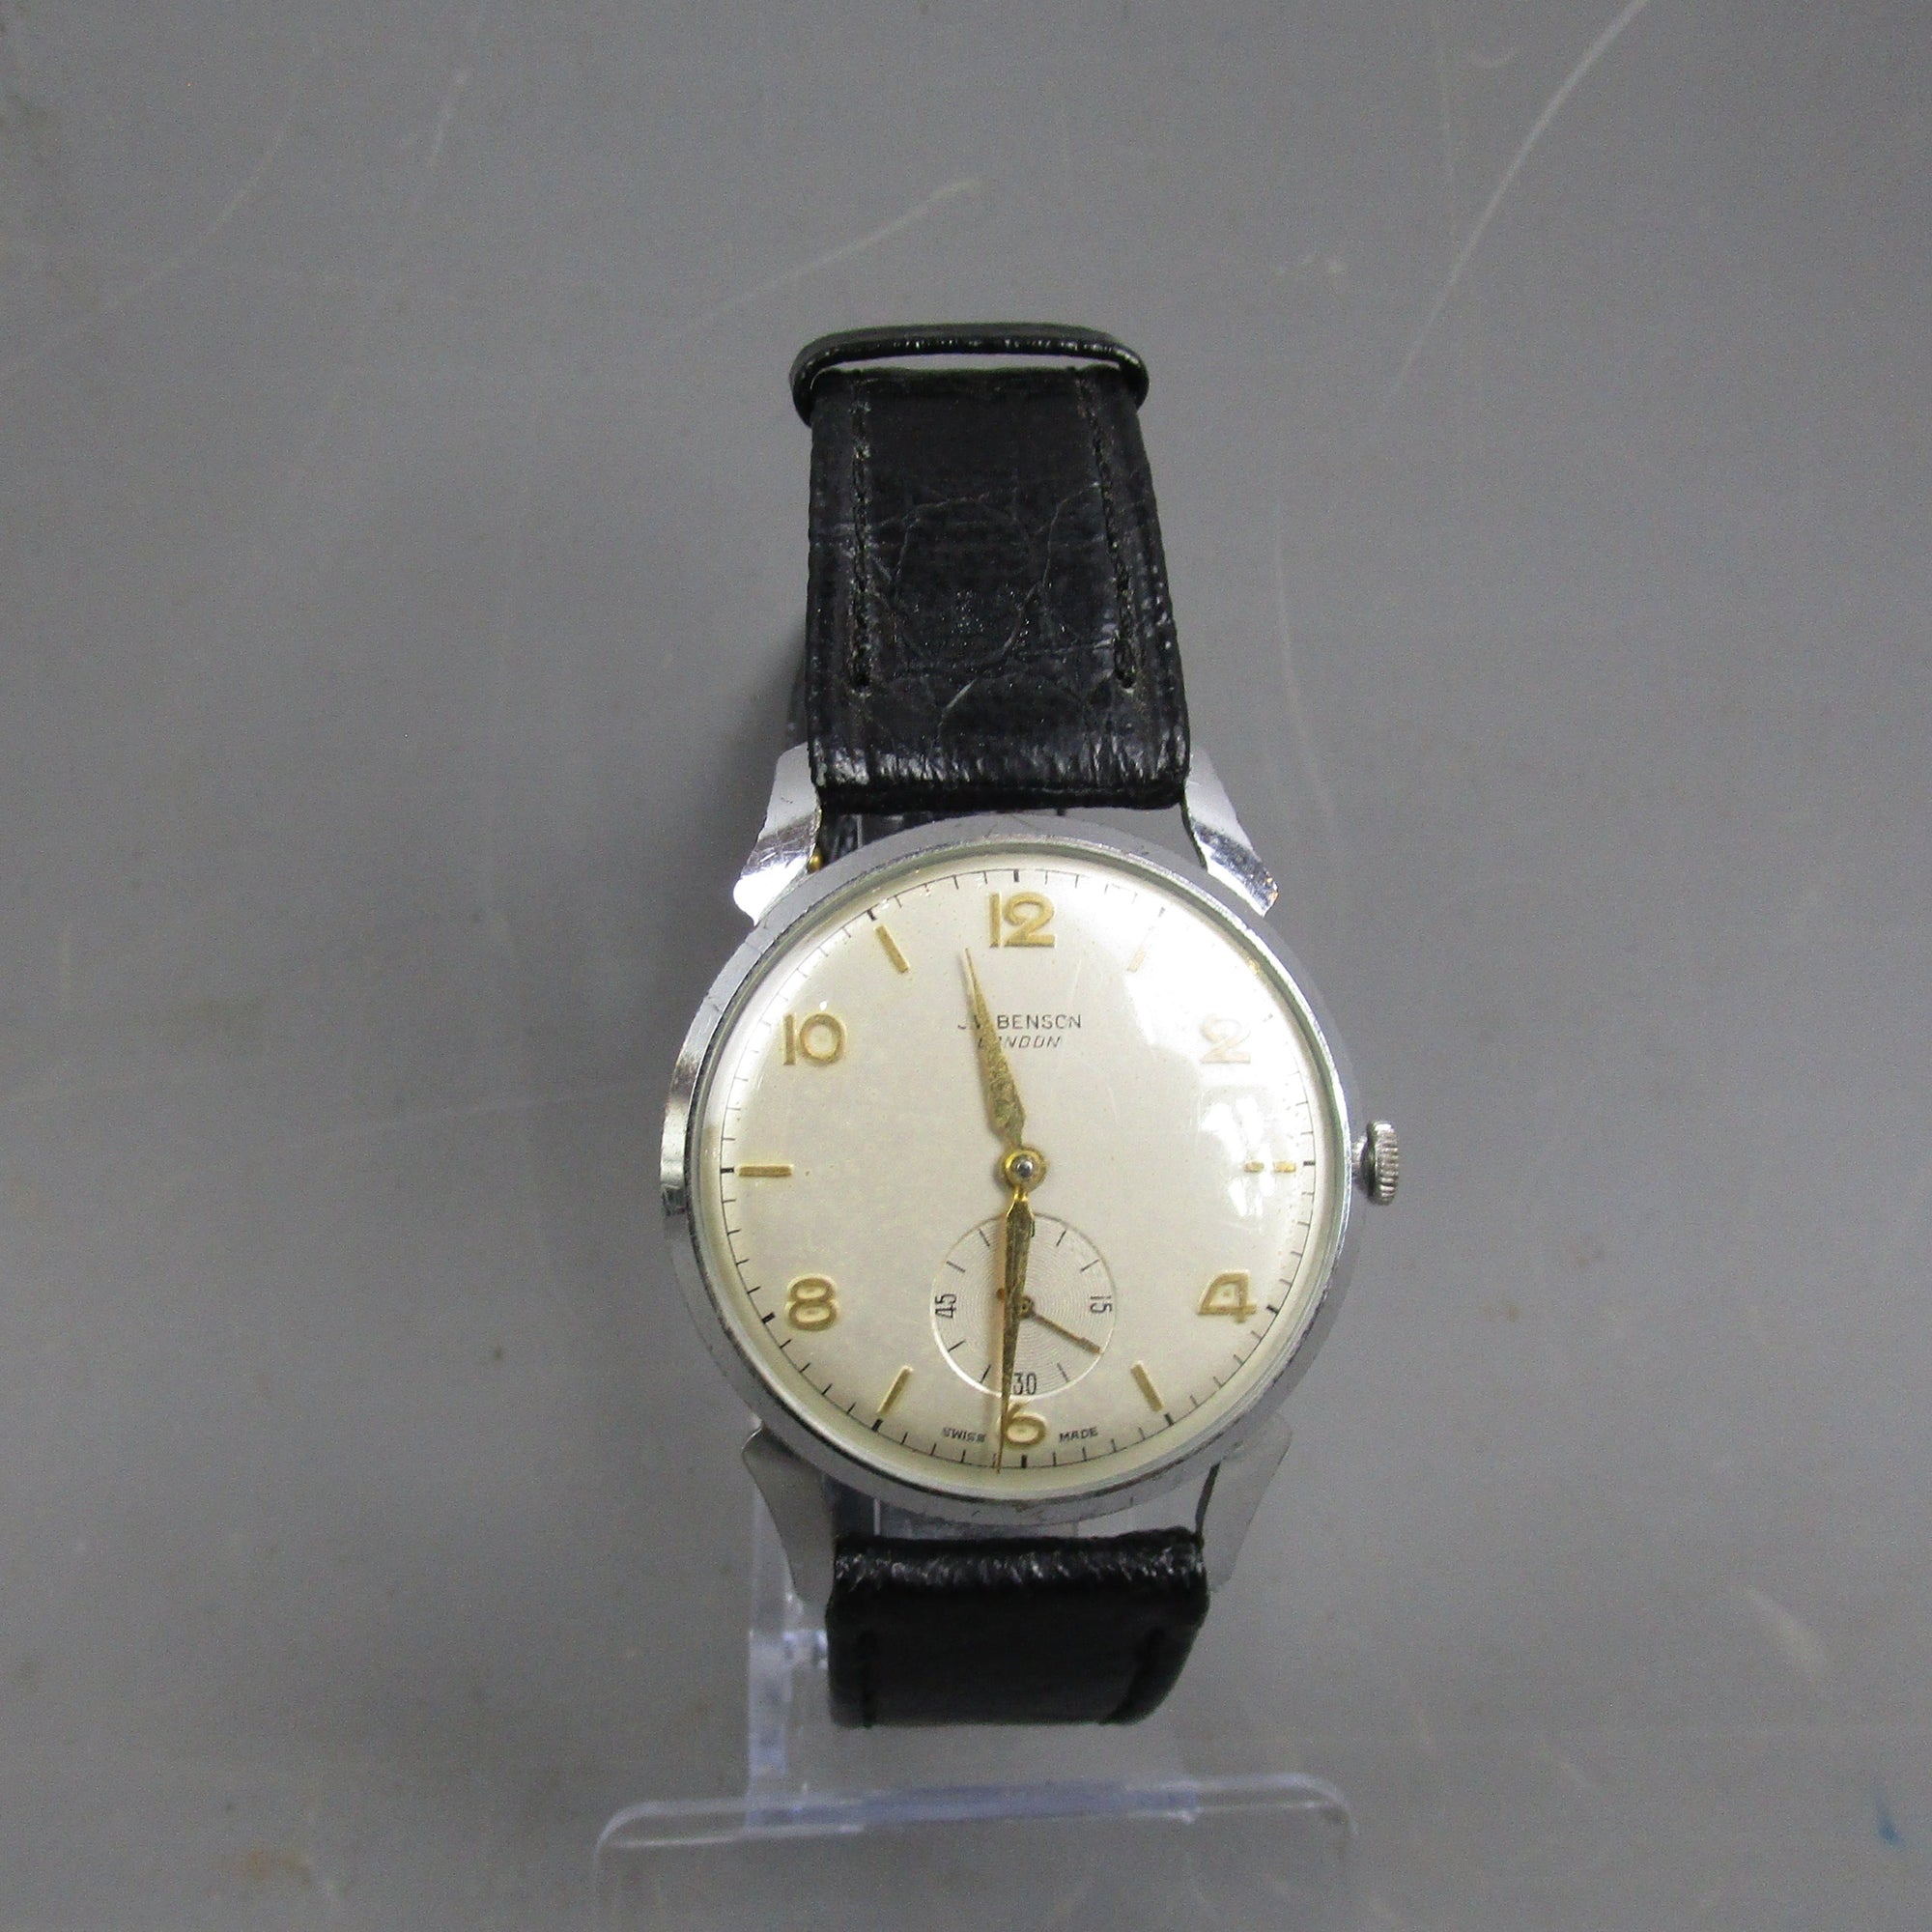 JW Benson London Horn Lug Manual Wind Gentleman's Wrist Watch Vintage c1950